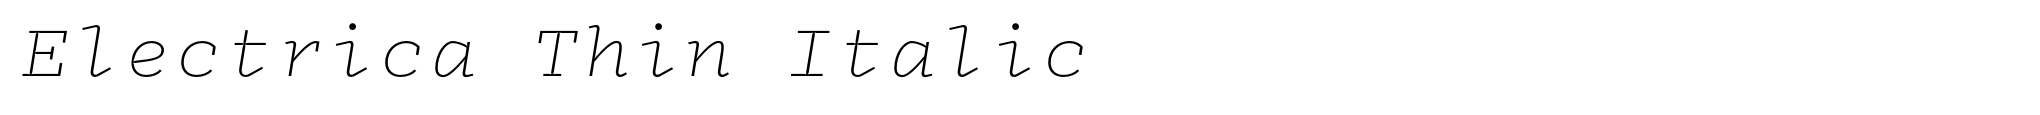 Electrica Thin Italic image